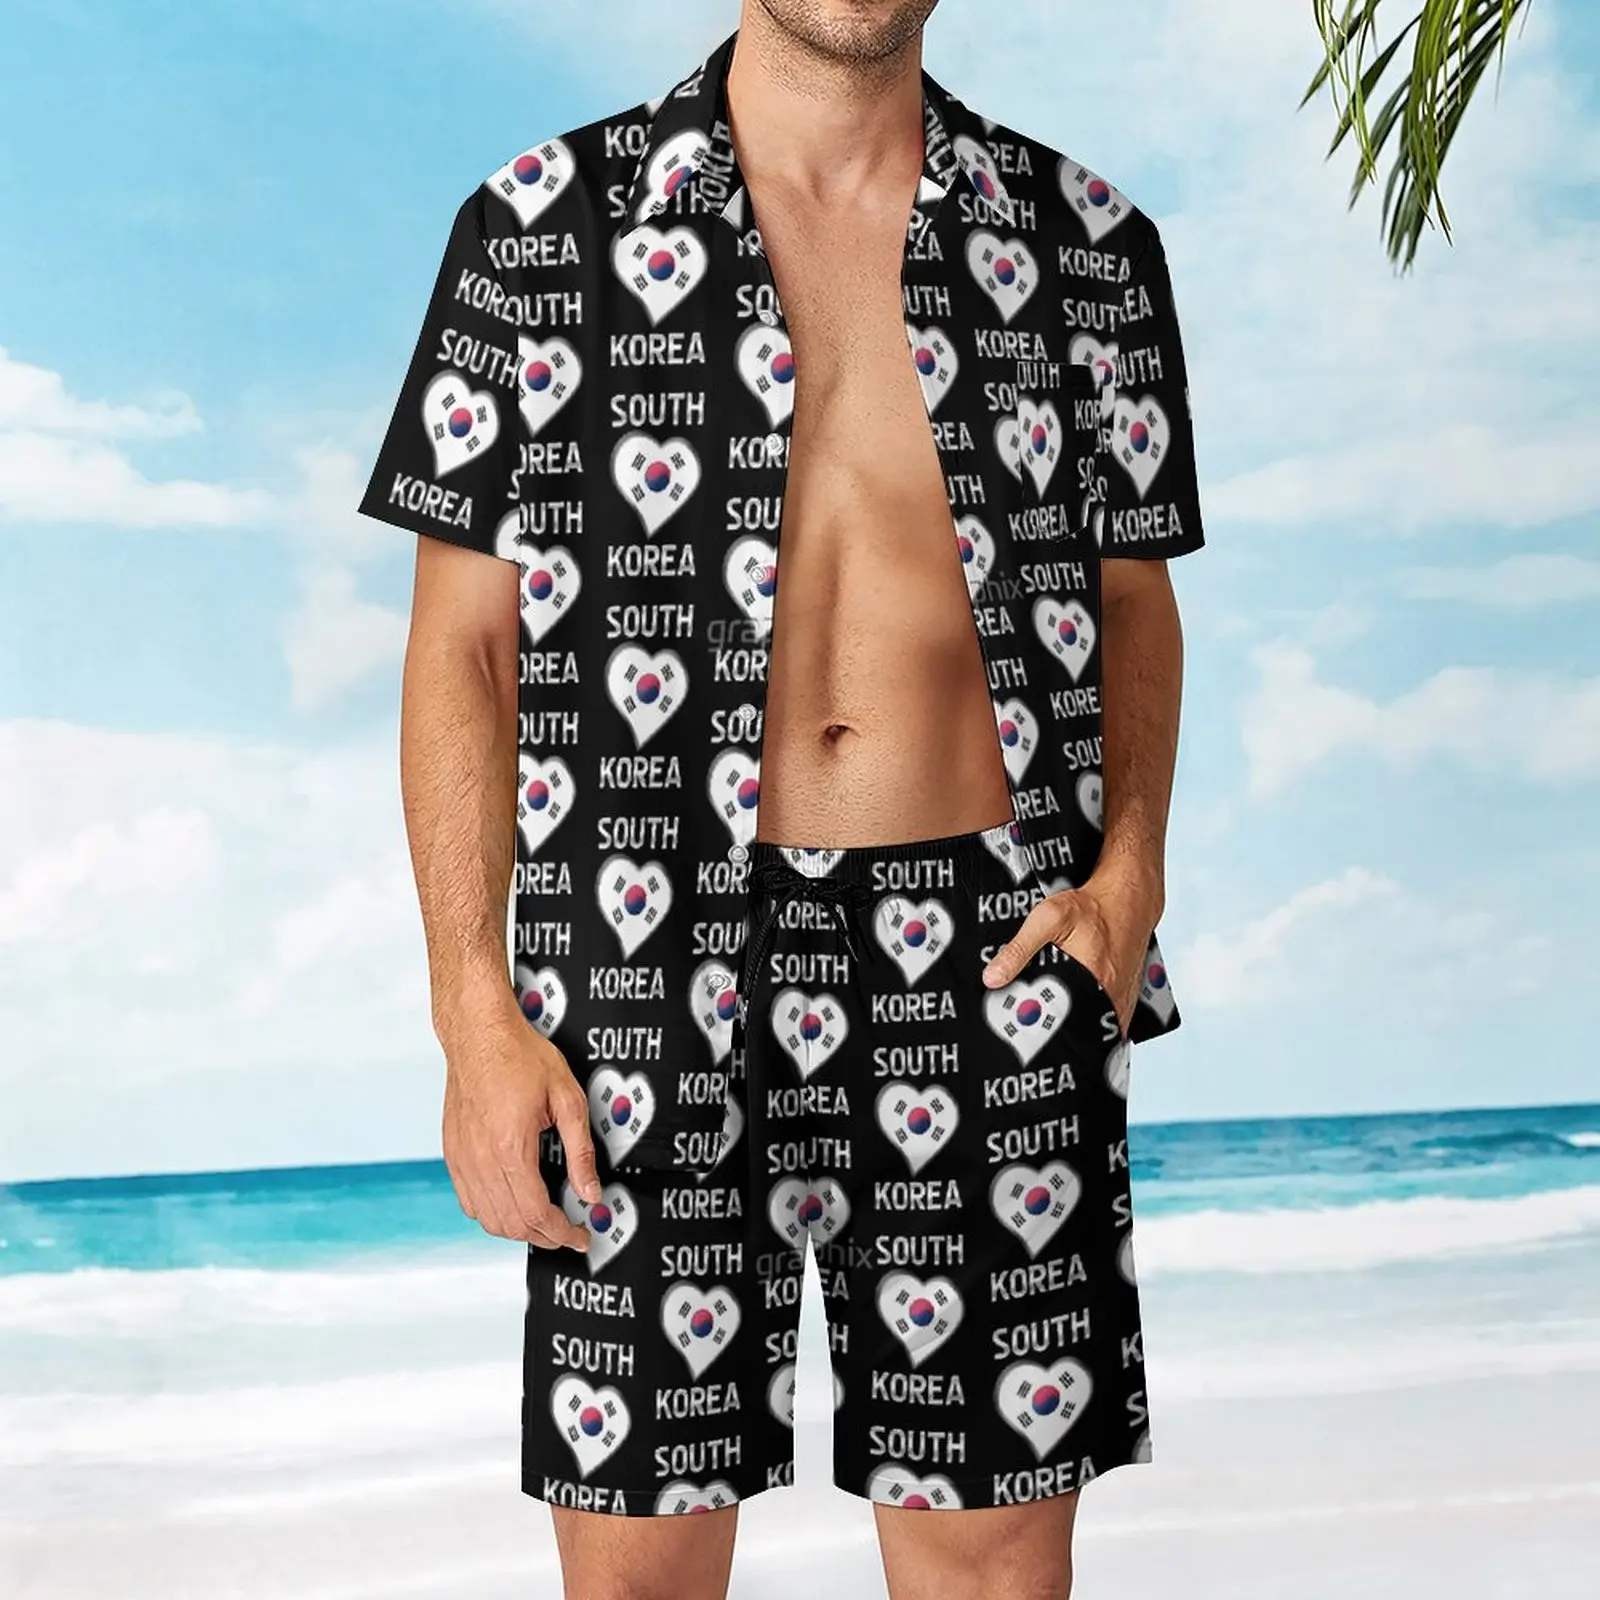 

South Korea South Korean Flag Heart & Tex Men's Beach Suit Funny Graphic 2 Pieces Pantdress High Quality Leisure USA Size